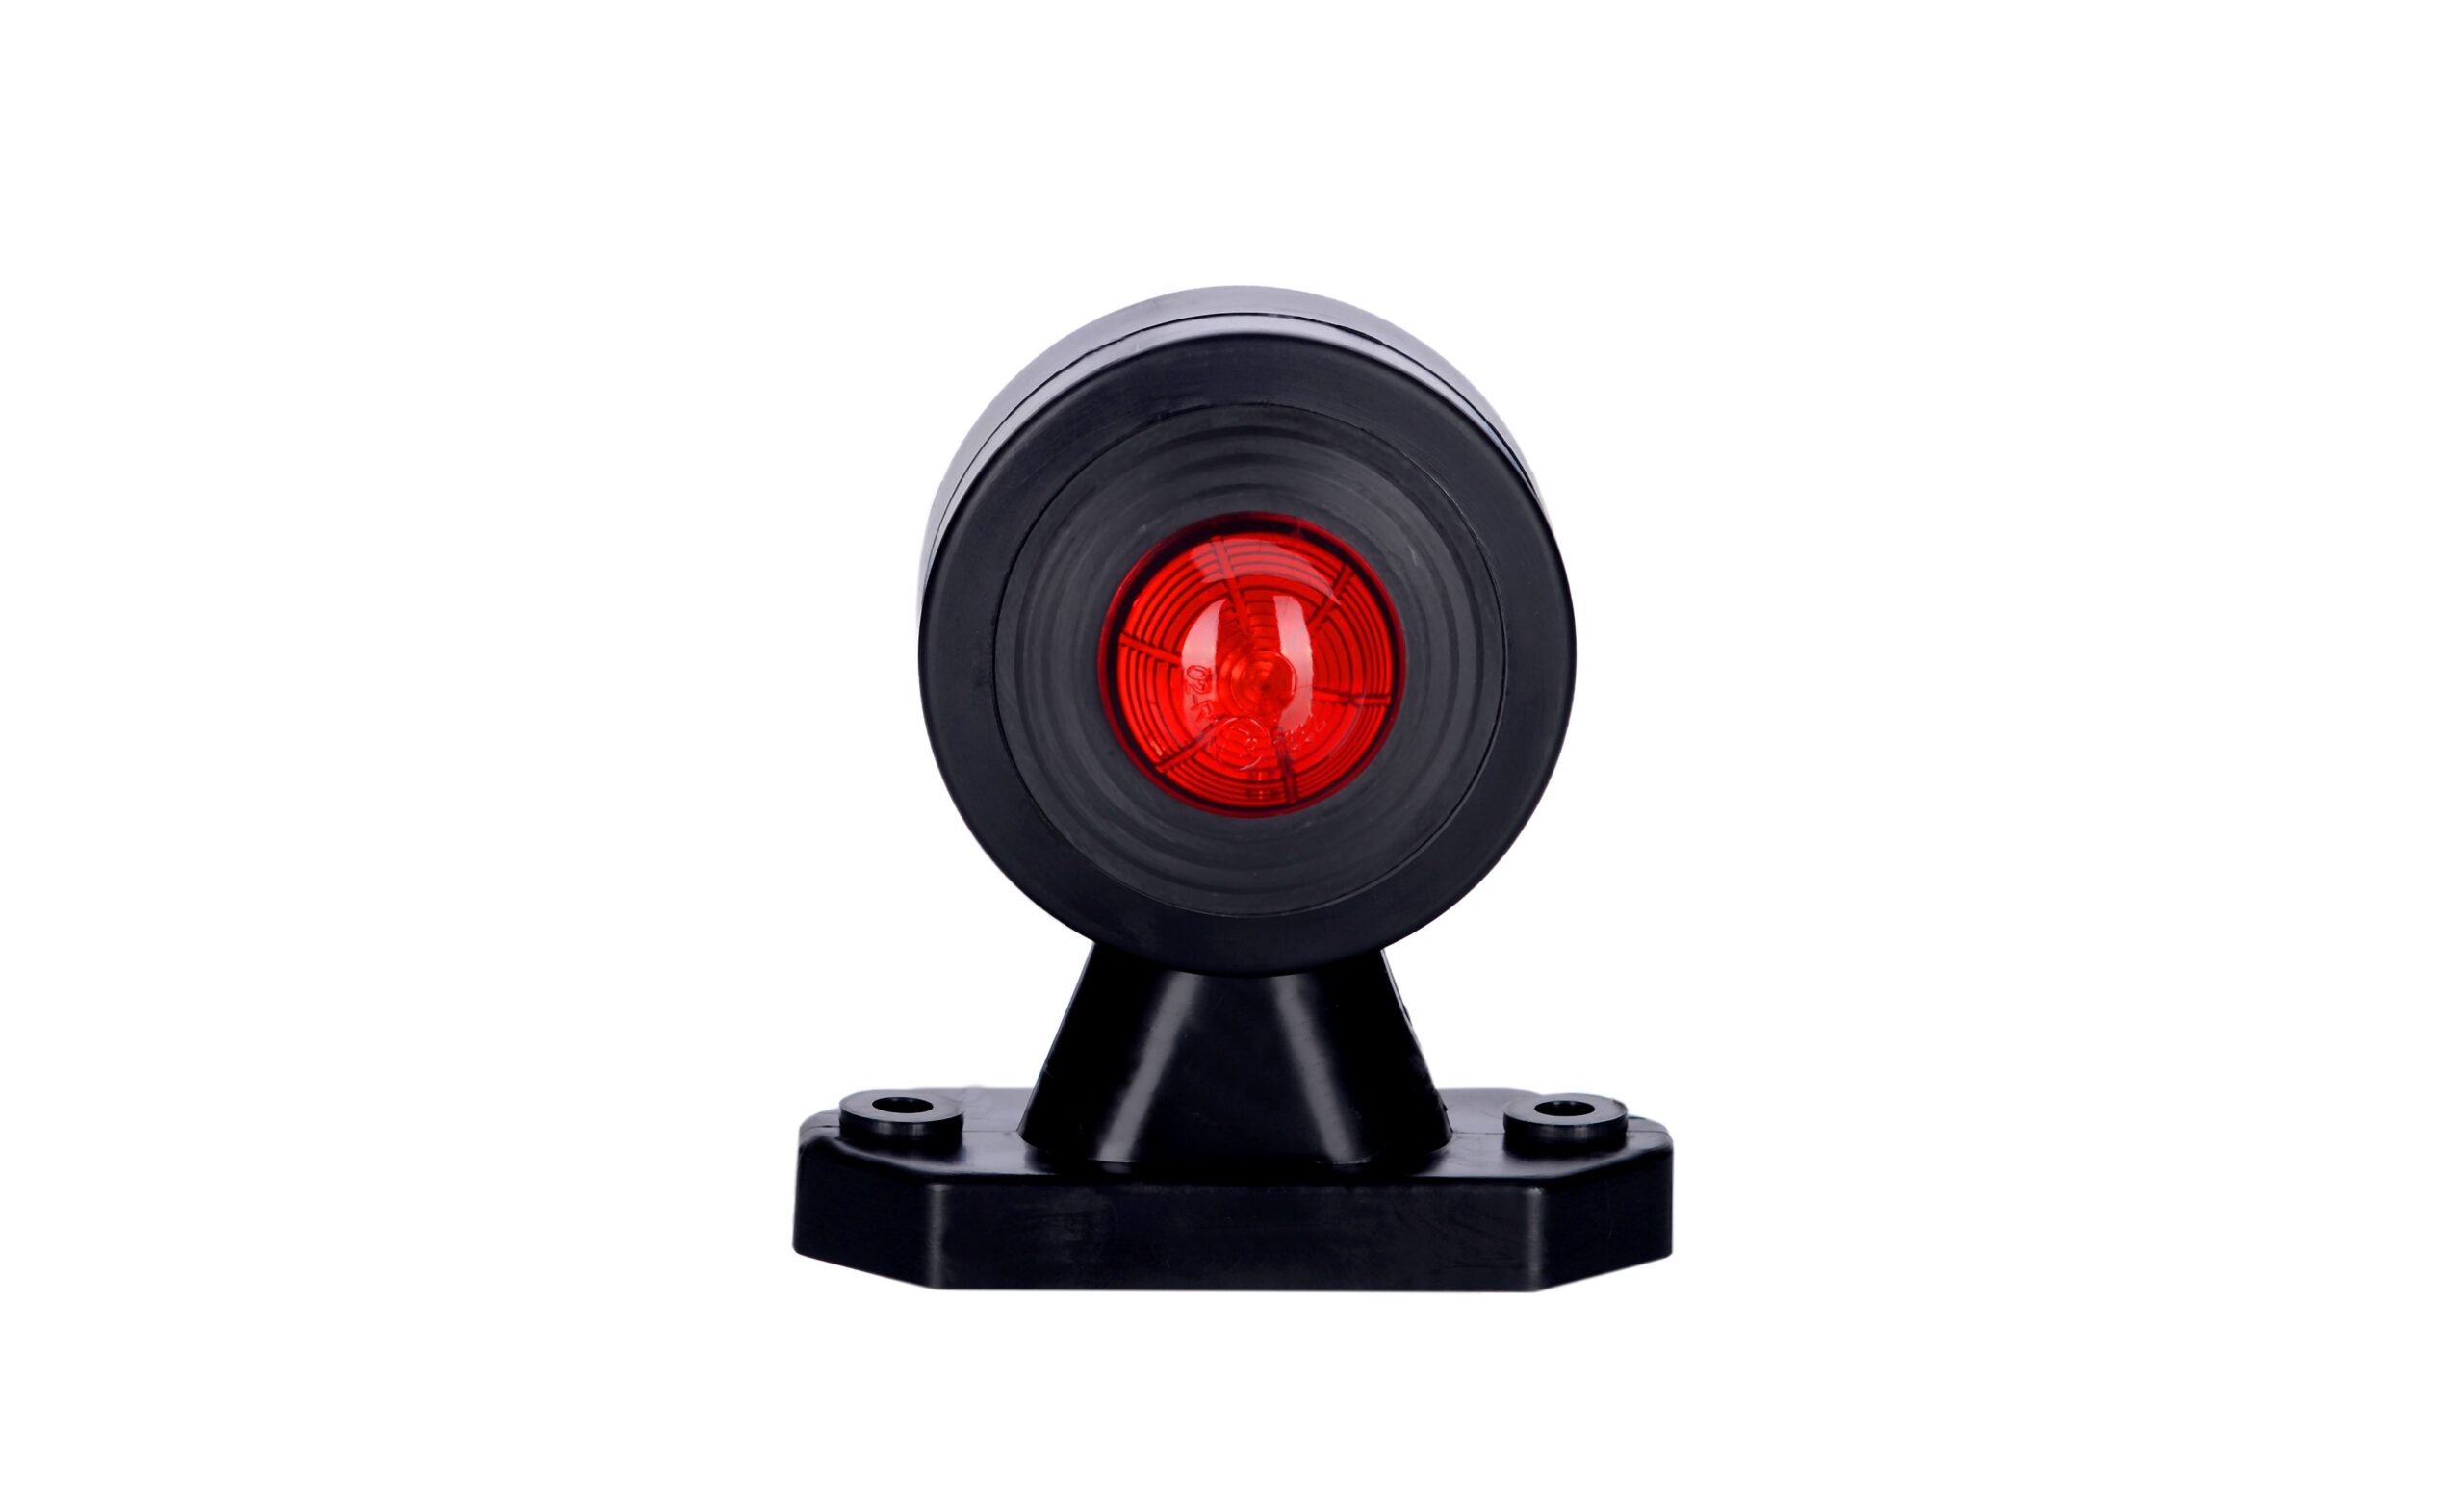 Lămpi de poziție și marcaj - Lampă gabarit rotundă, Horpol, LED alb-roșu, braț scurt, alimentare 12/24V, fomcoshop.ro